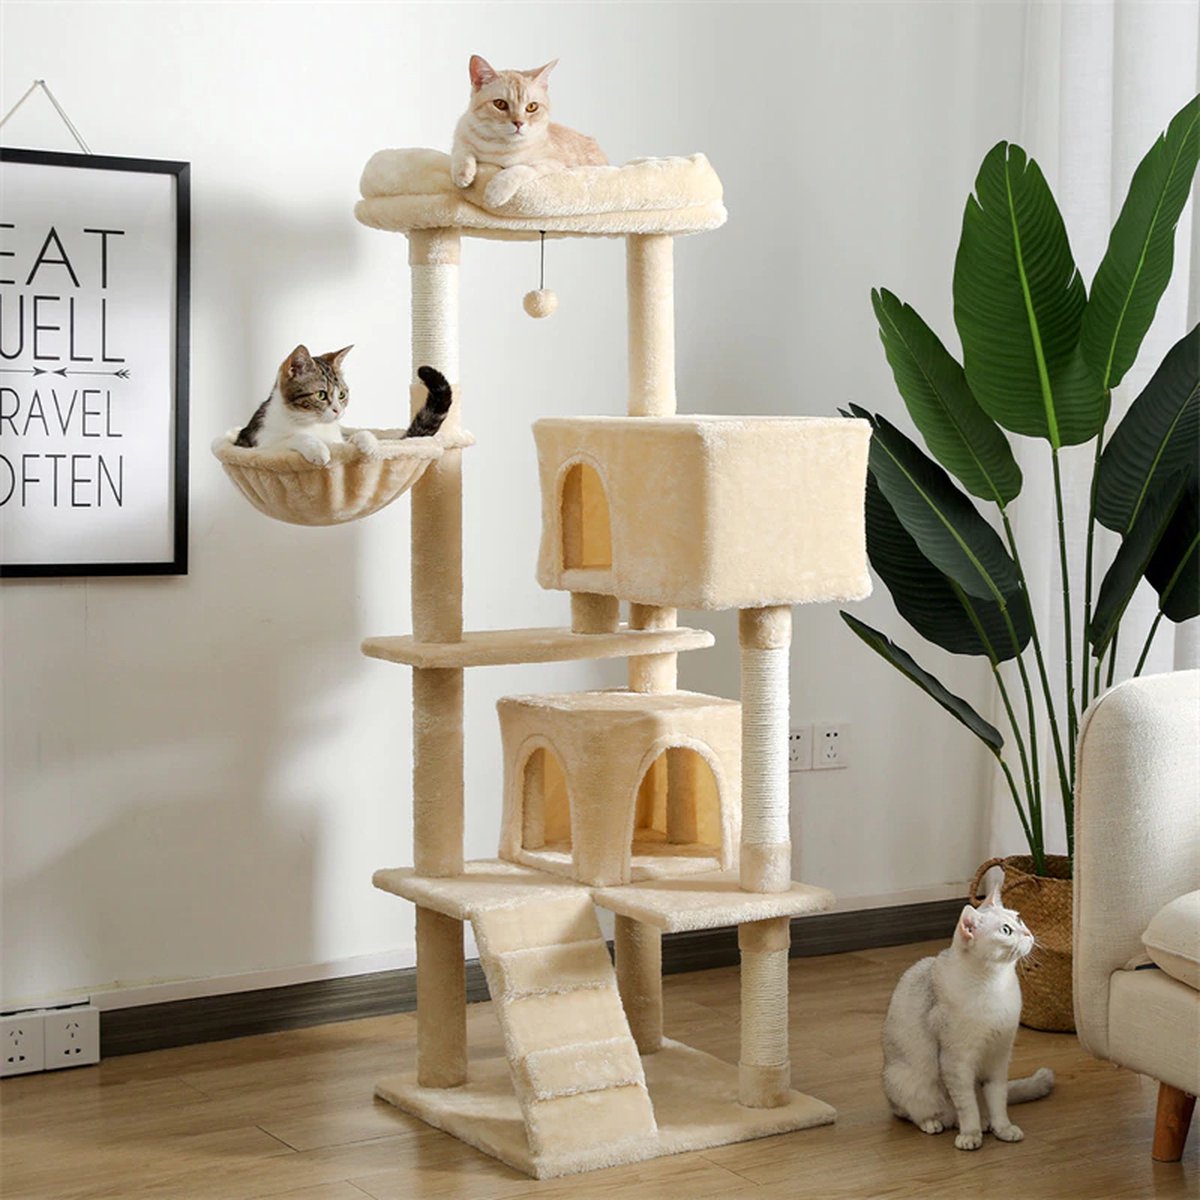 InHarmony - Katten krab toren beige - Kattenkrab toren - katten krabpaal - krabpaal kat - krabpaal - kattenpaal krabpaal - katten paal voor grote katten en katten paal voor kleine katten